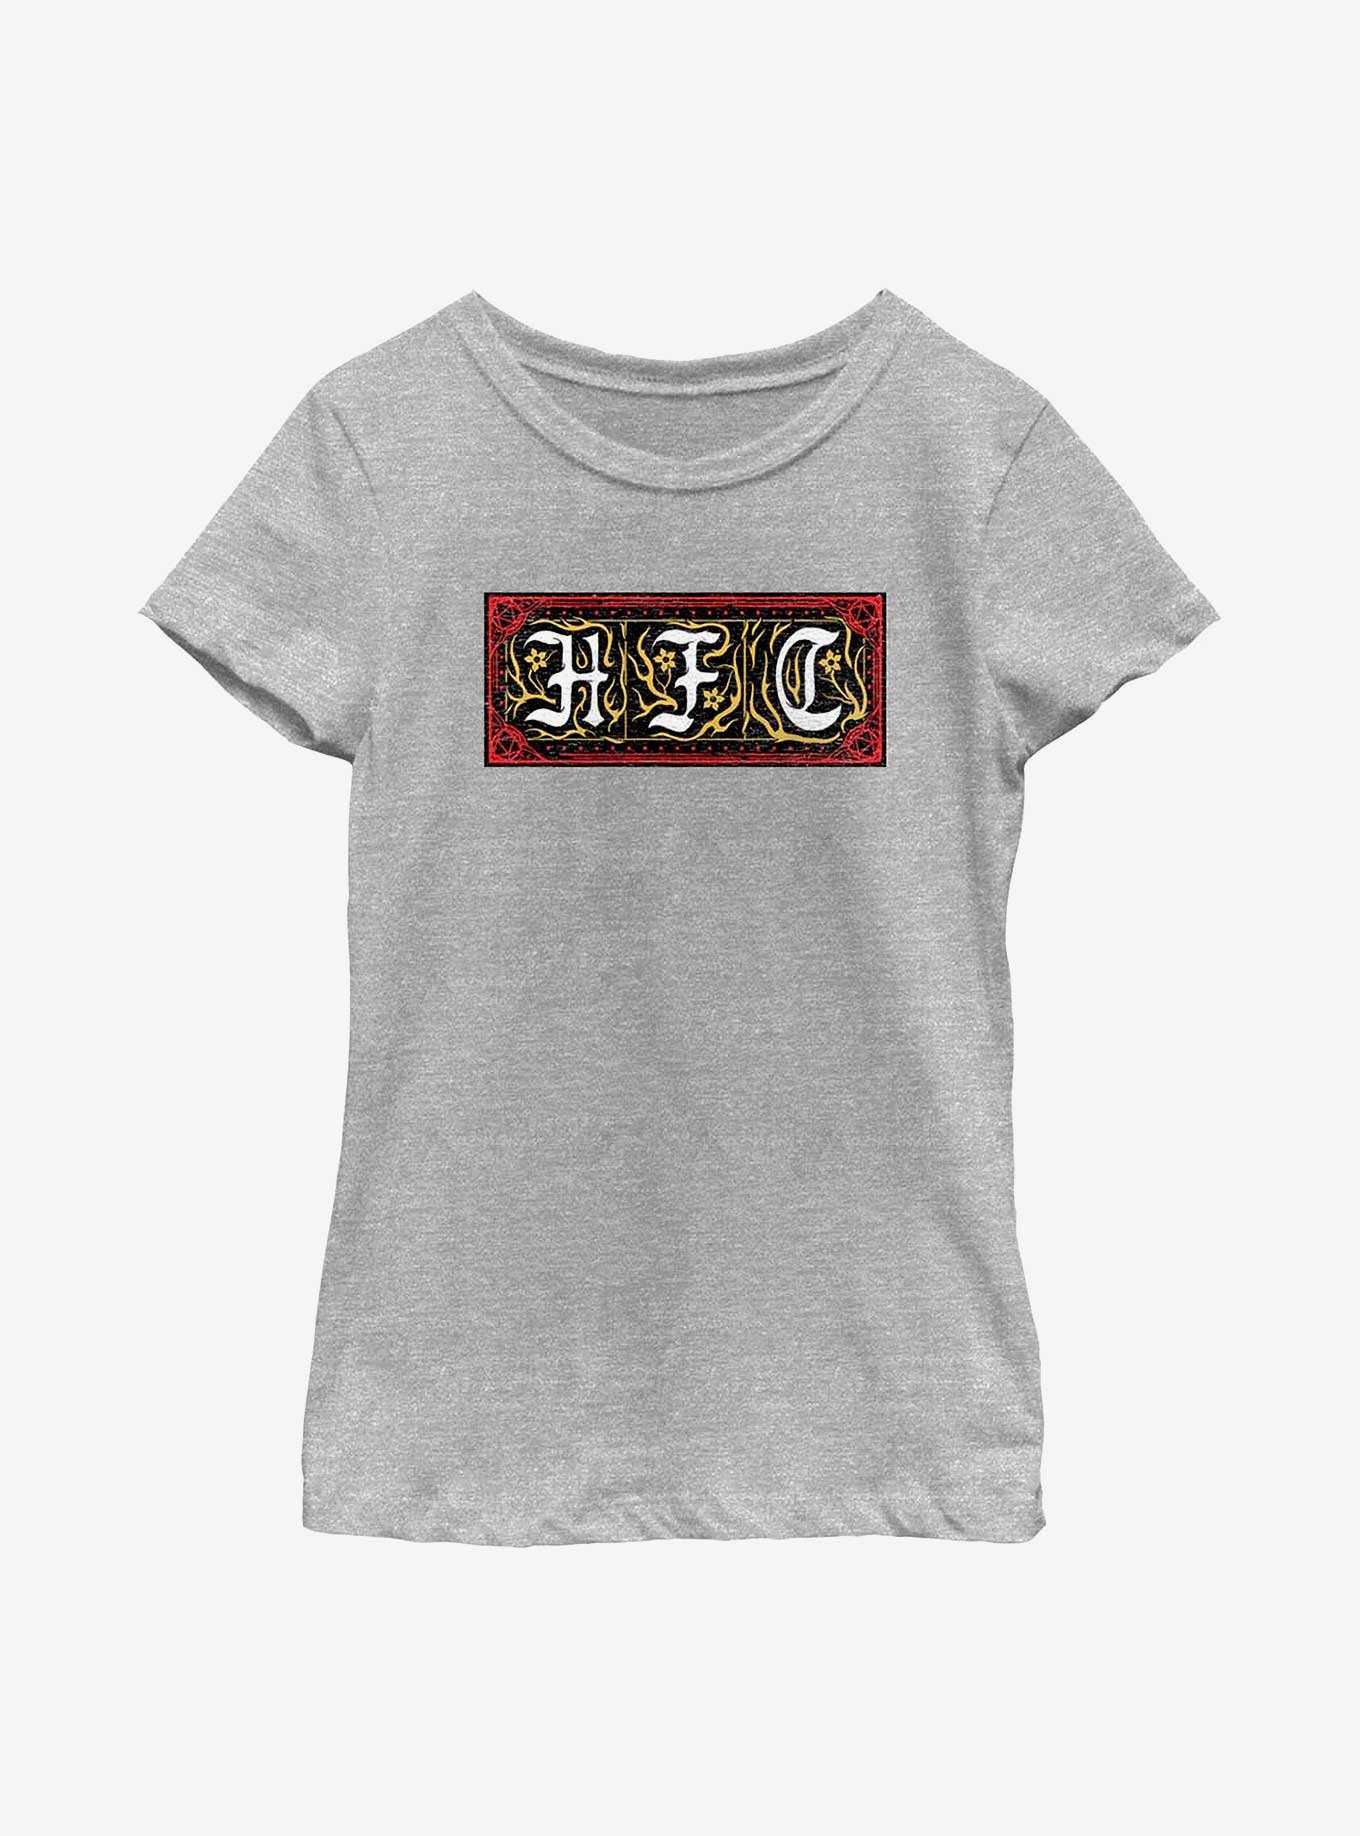 Stranger Things Hellfire Club Emblem Youth Girls T-Shirt, , hi-res